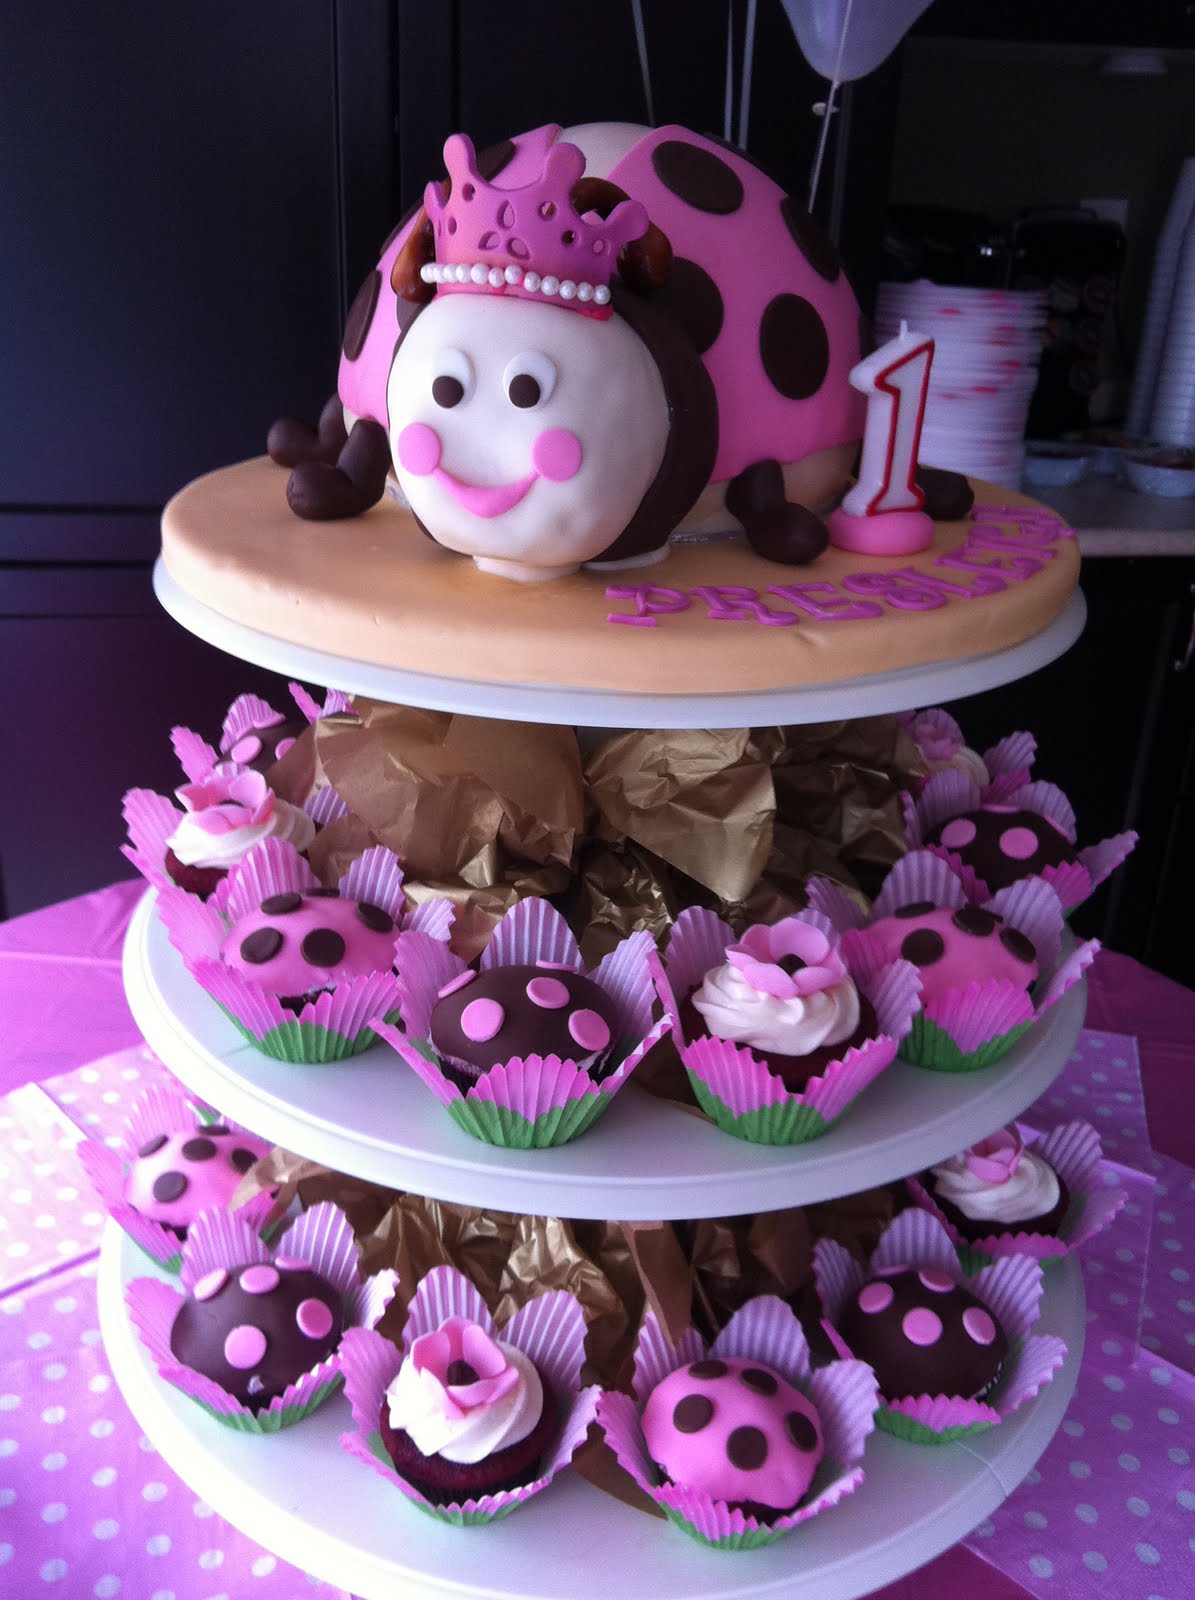 Jocelyn's Wedding Cakes and More....: Ladybug Cupcakes/Ladybug Brown